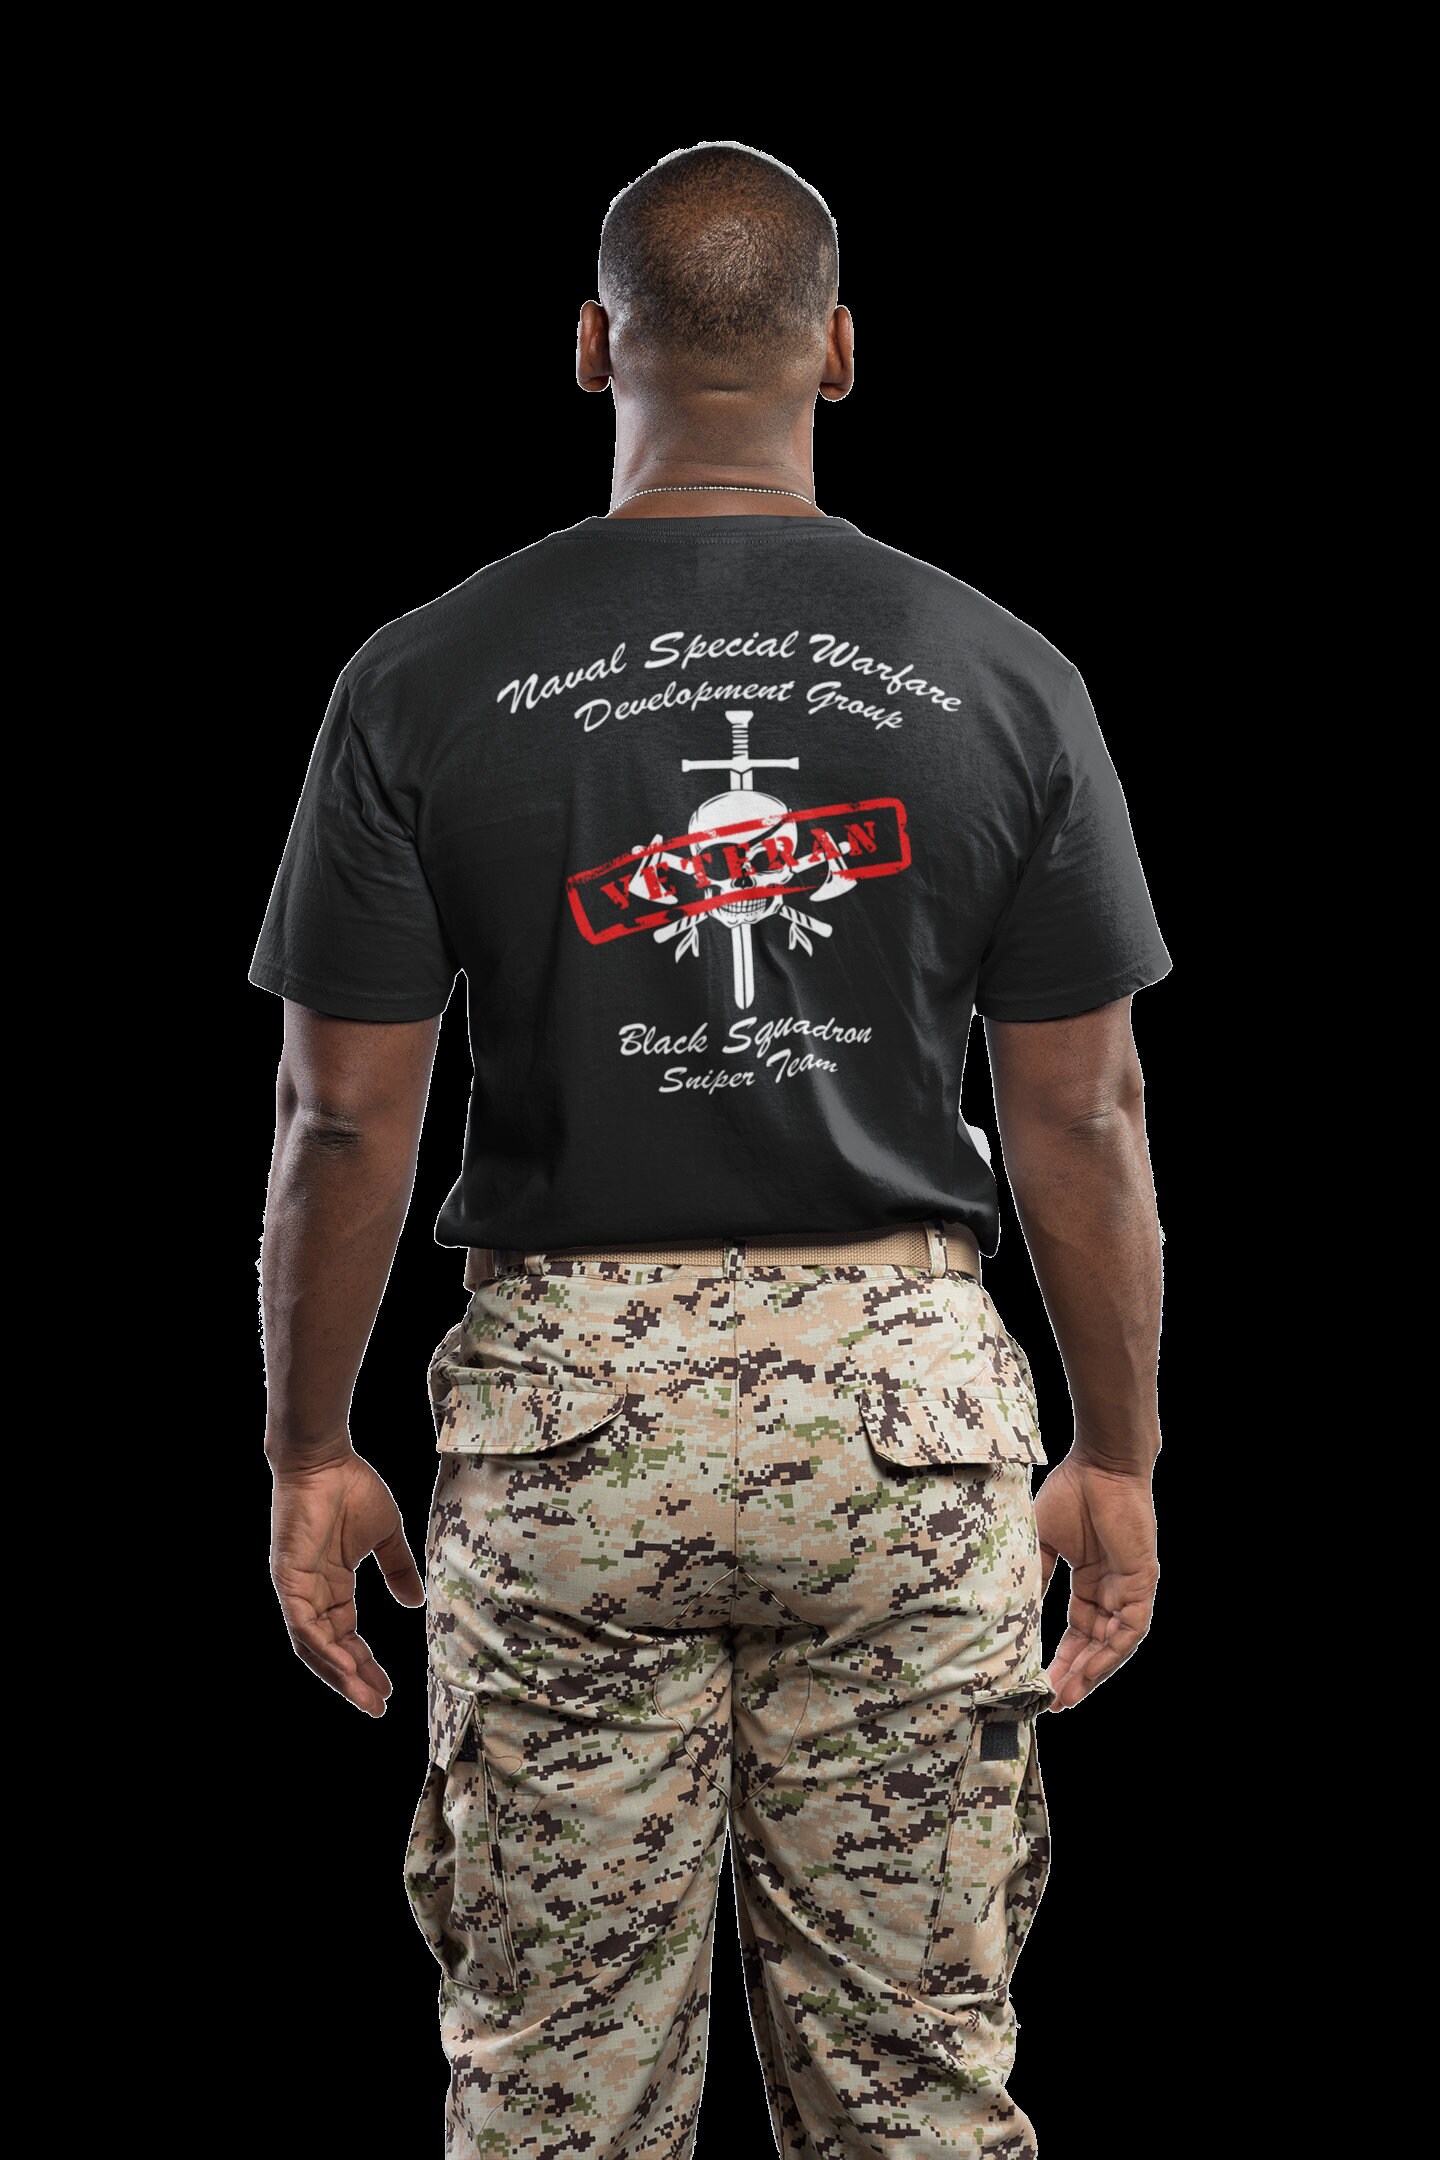 Naval Special Warfare Shirt Black Squadron Veteran Navy Seal - Etsy